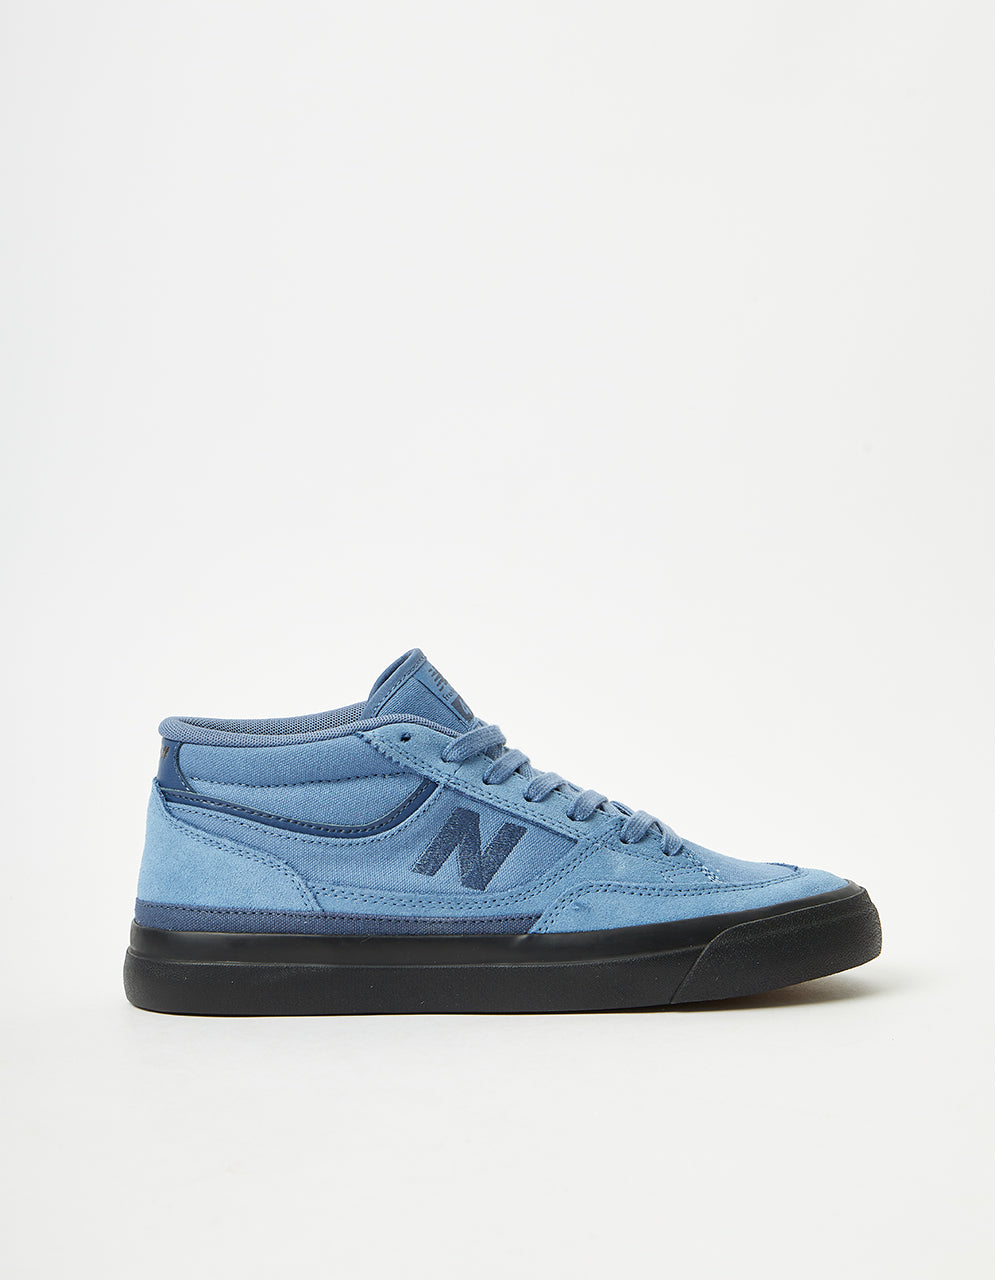 New Balance Numeric 417 Skate Shoes - Steel Blue/Black